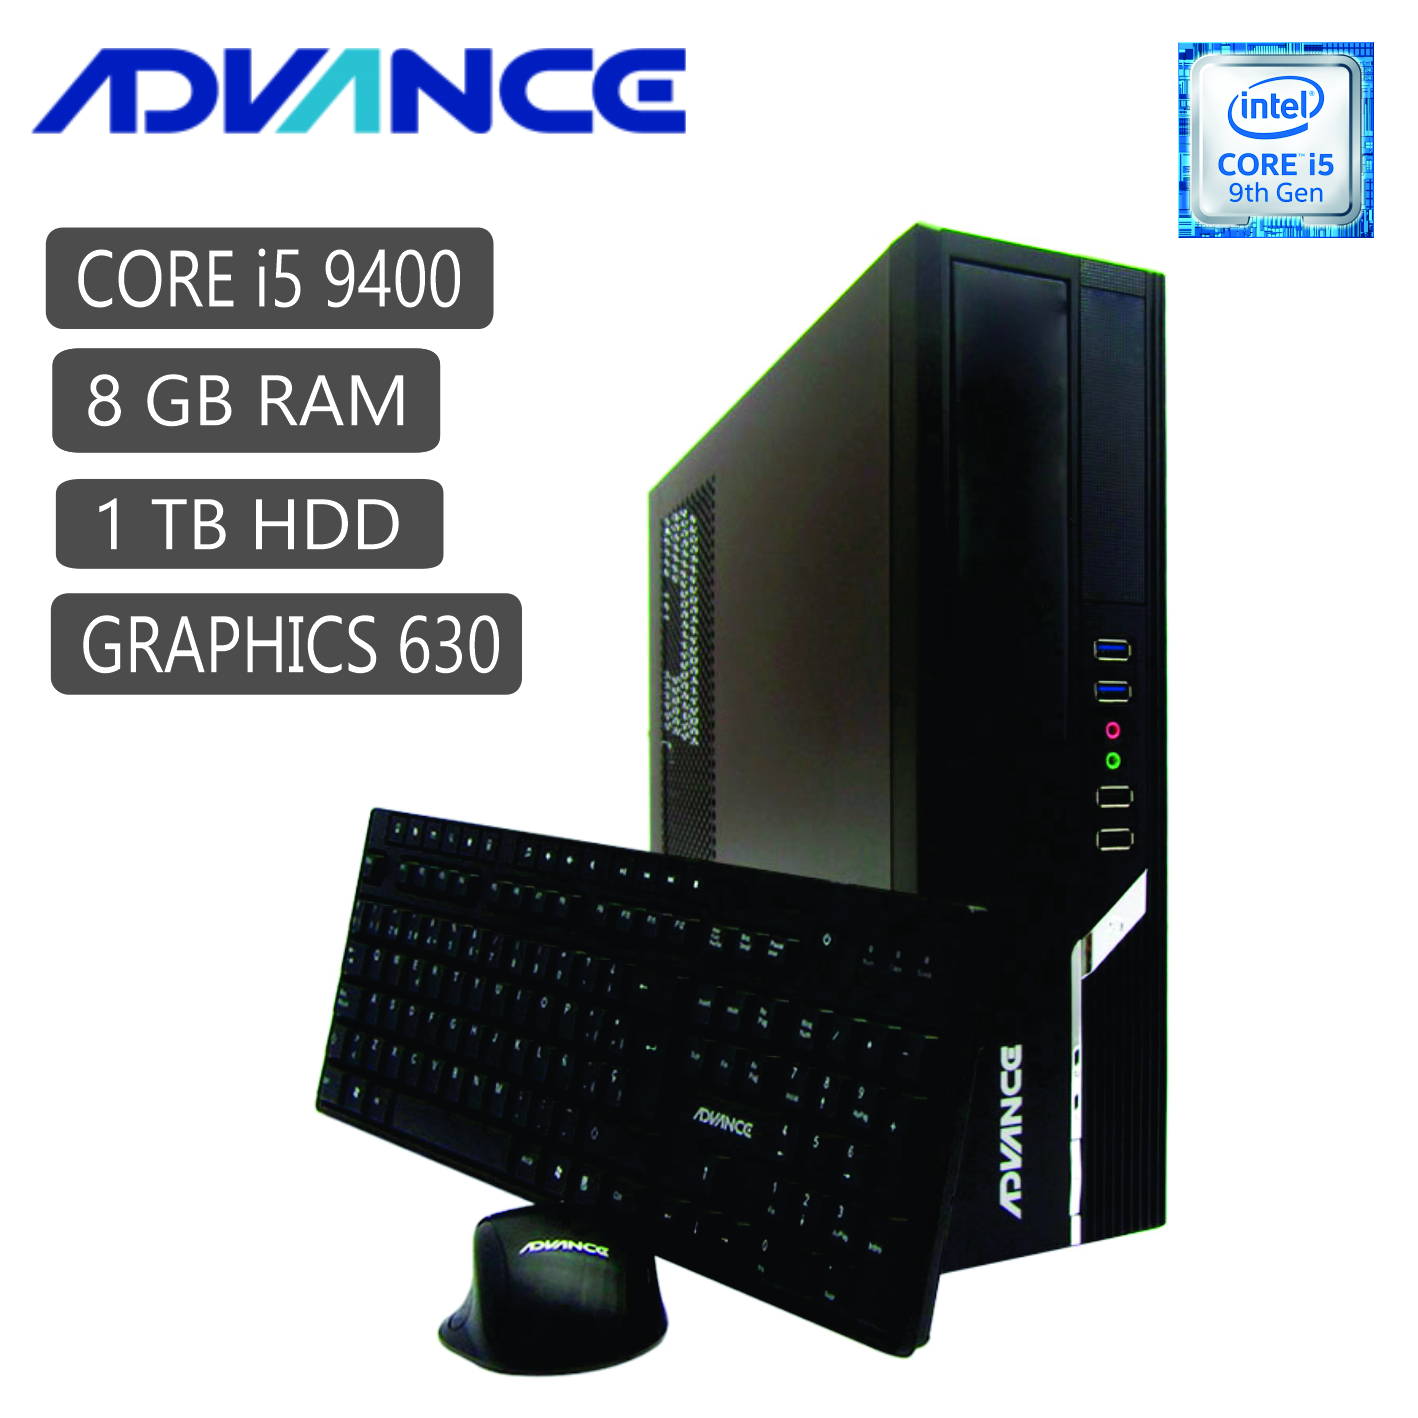 Computadora Advance Vission VO2530 SFF, Intel Core i5-9400 2.90GHz, 8GB DDR4, 1TB SATA/ DVD SuperMulti, video Intel HD Graphics 630, LAN GbE, teclado y mouse. Sistema Operativo Ubuntu. WIFI